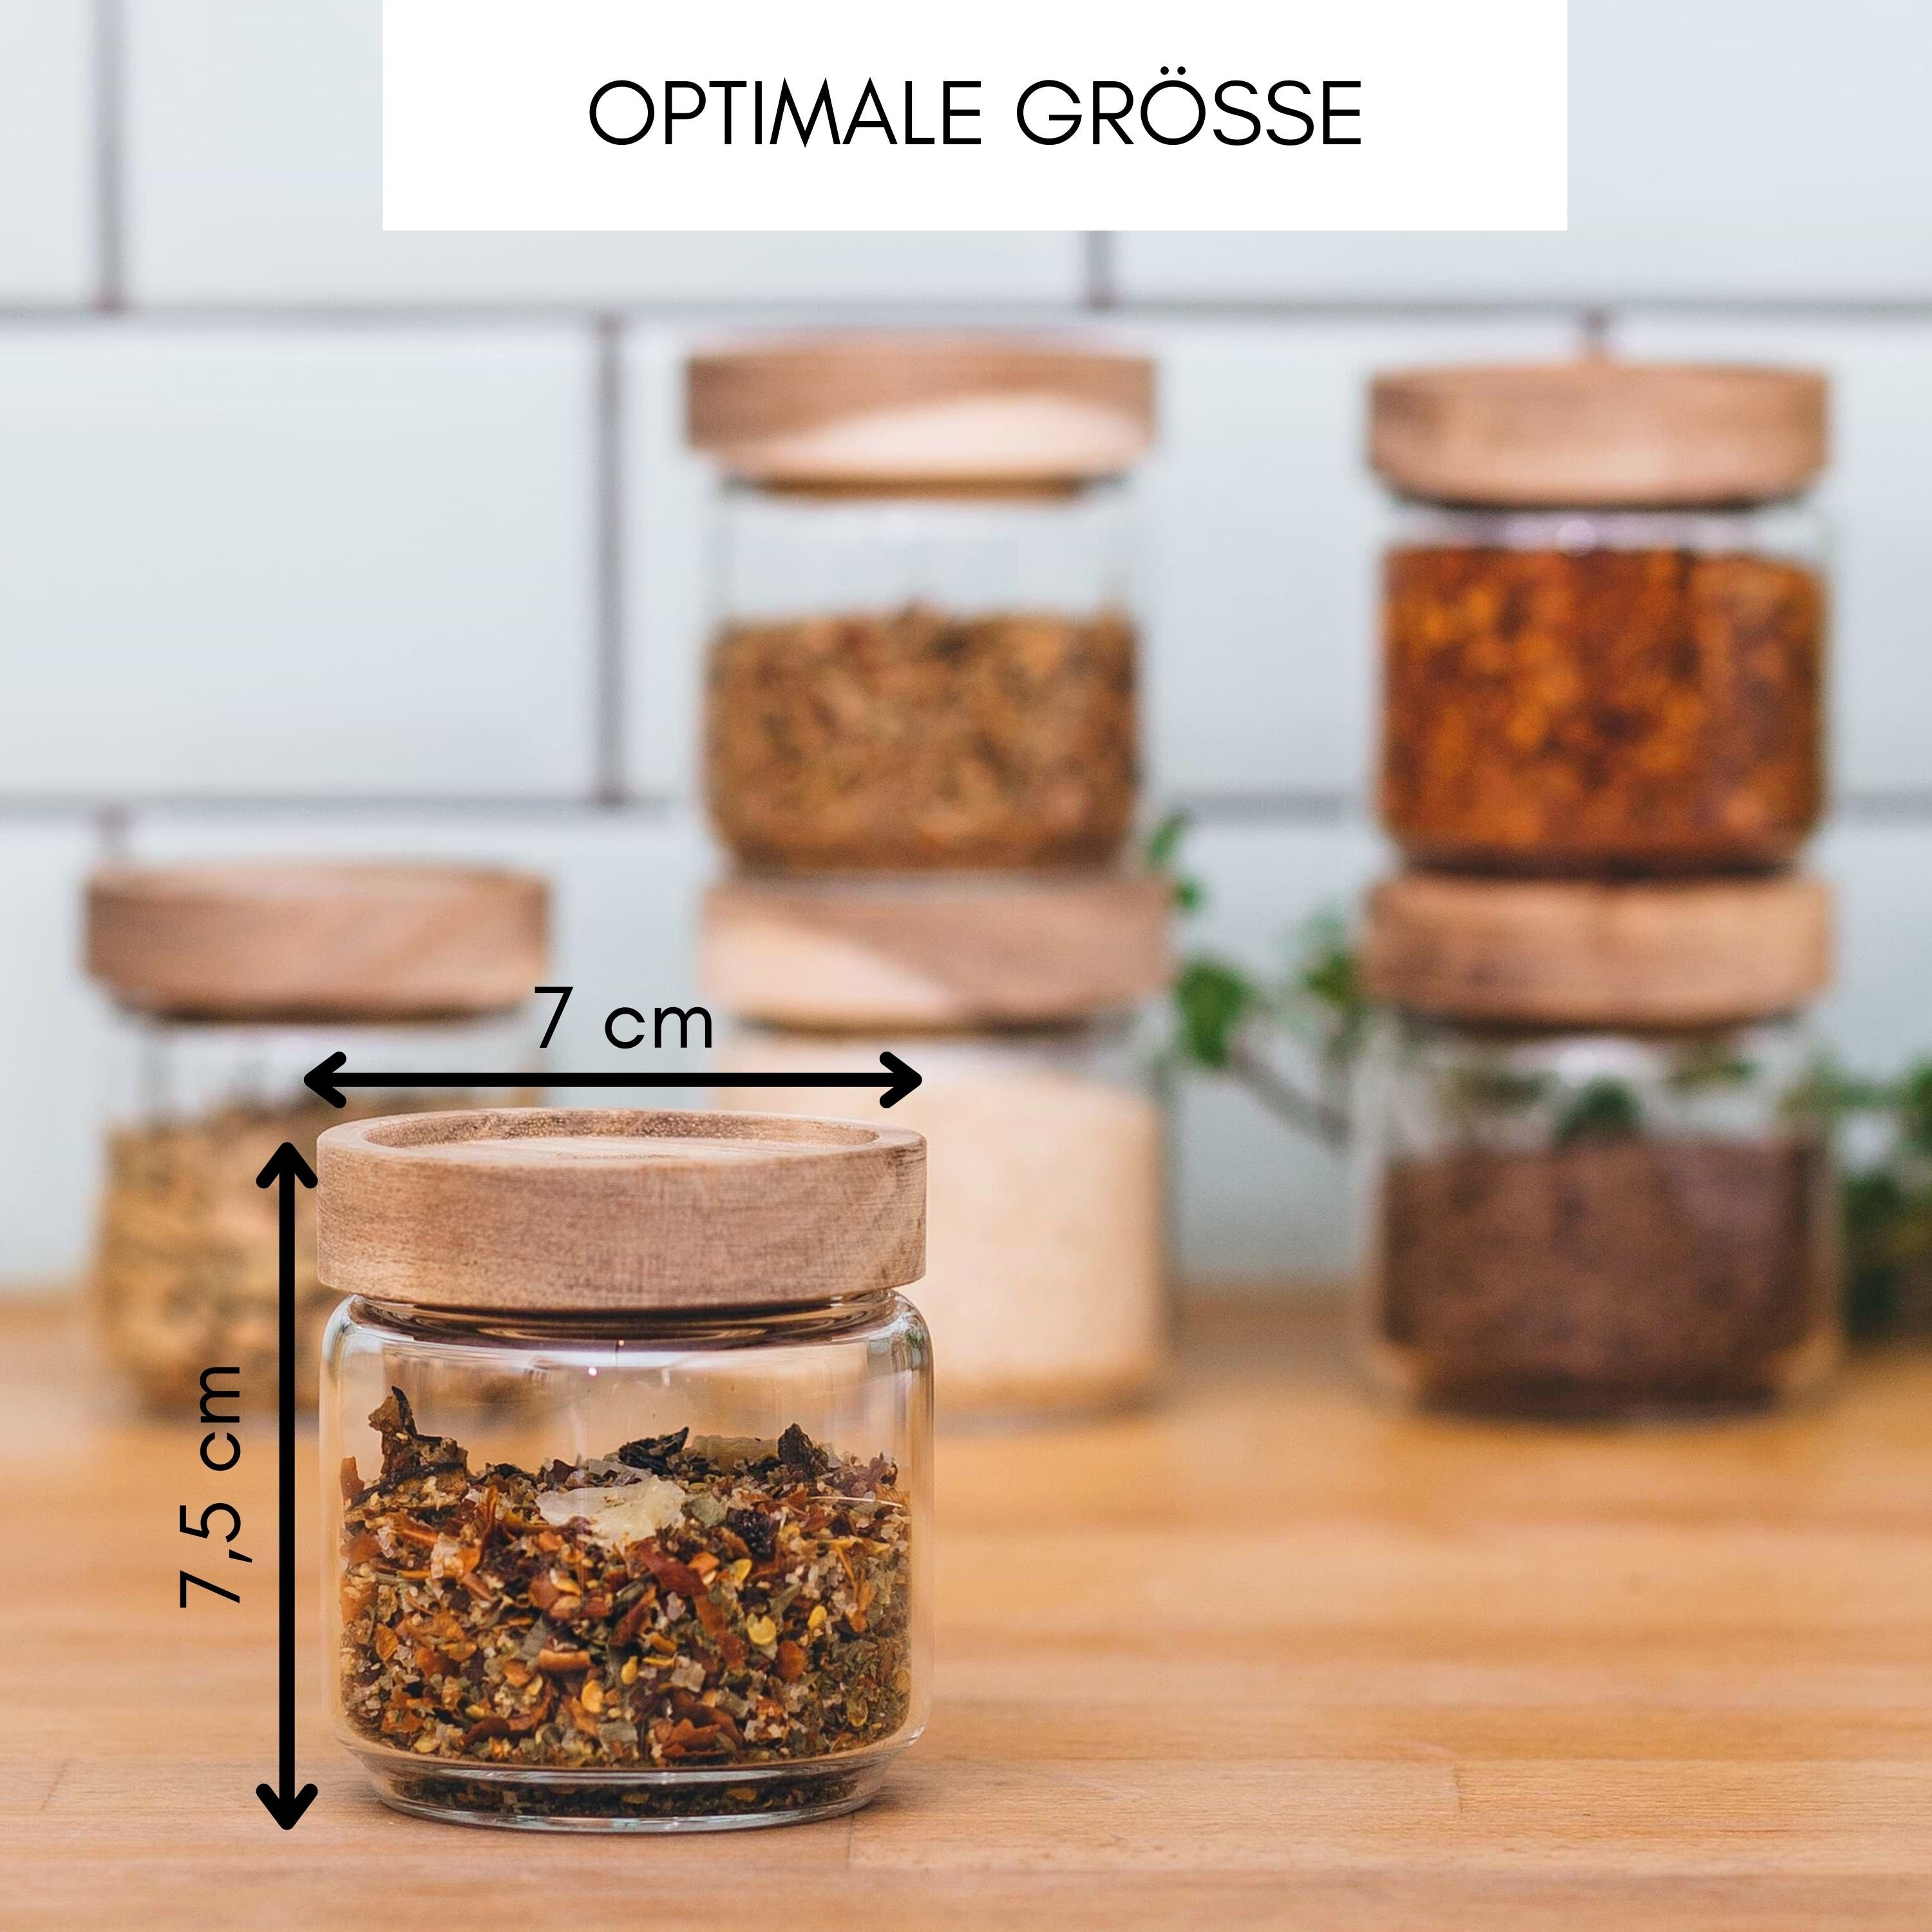 Hot Sell Borosilicate Kitchen Storage Glass Jar Set Spice